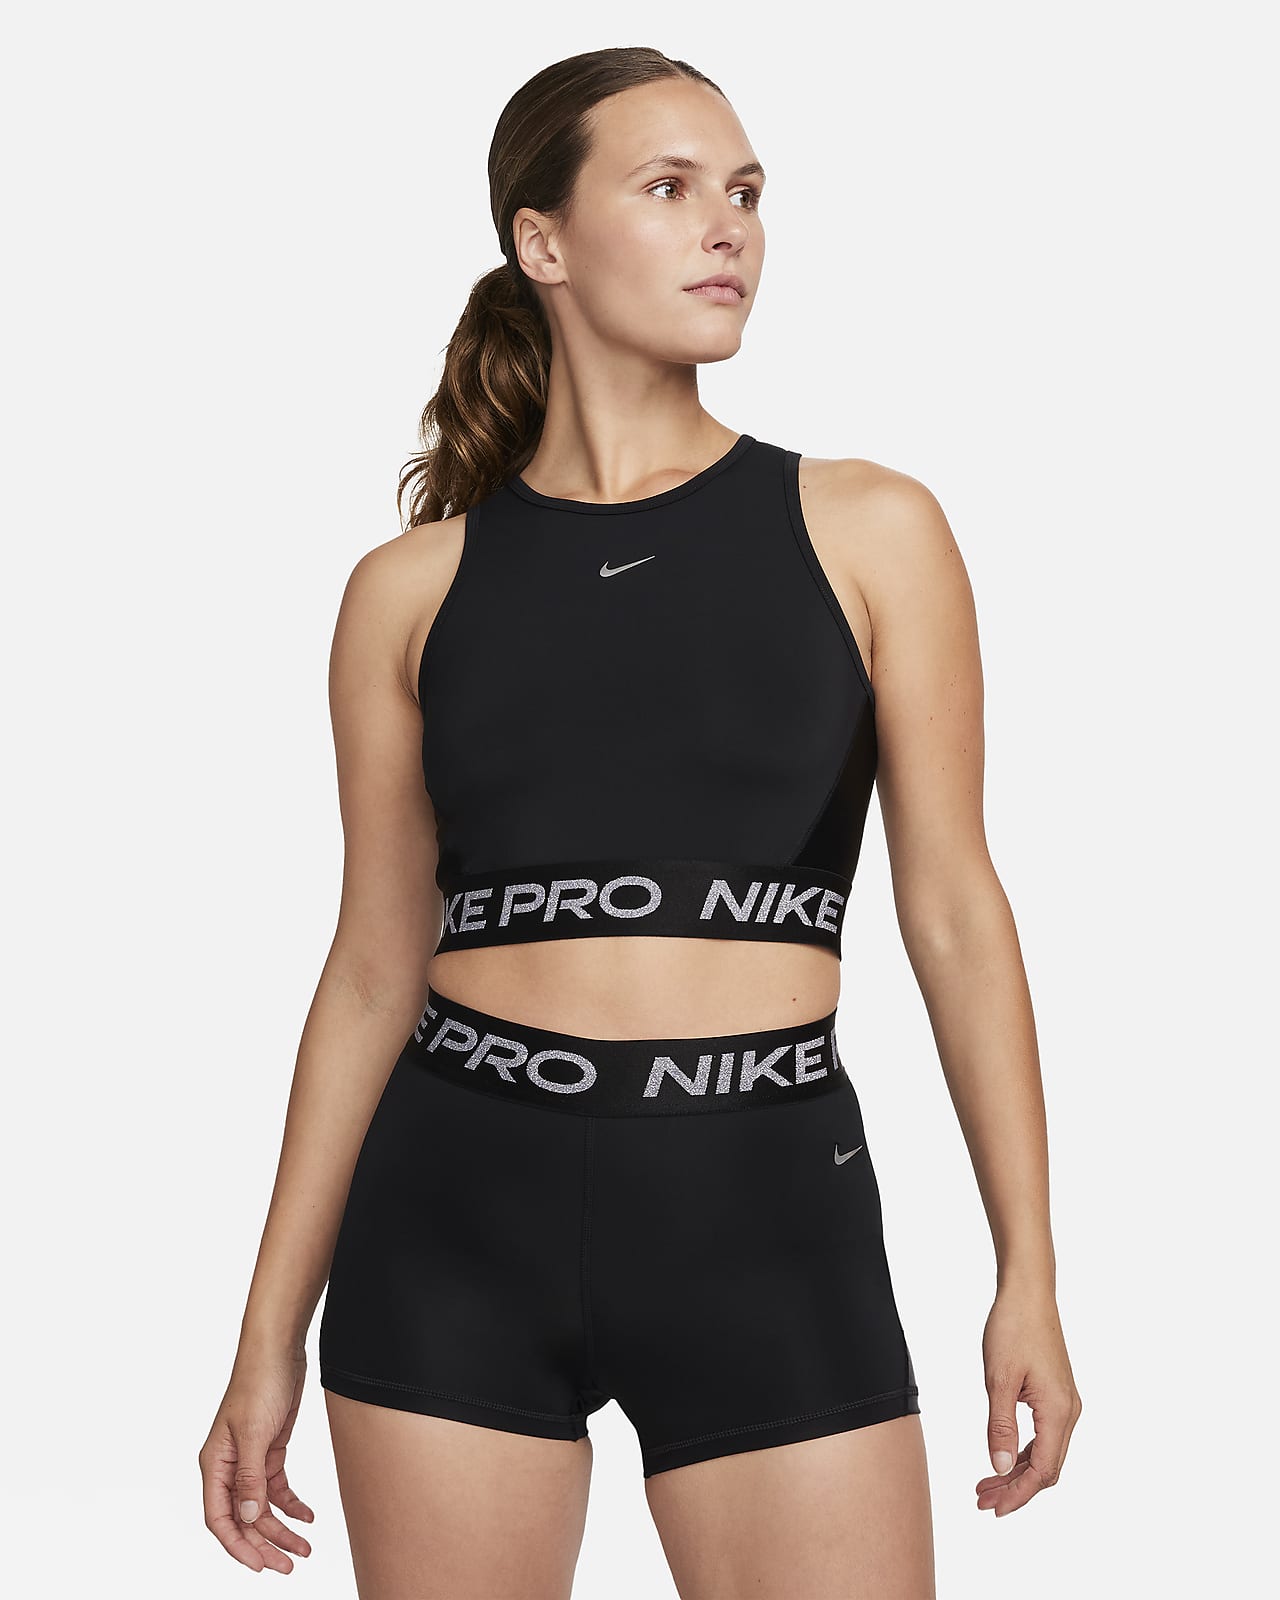 Nike Pro Dri-fit Swoosh Leopard Shine Medium Support Sports Bra Women's $15  #linkinbio #linkinbio👉💻 …